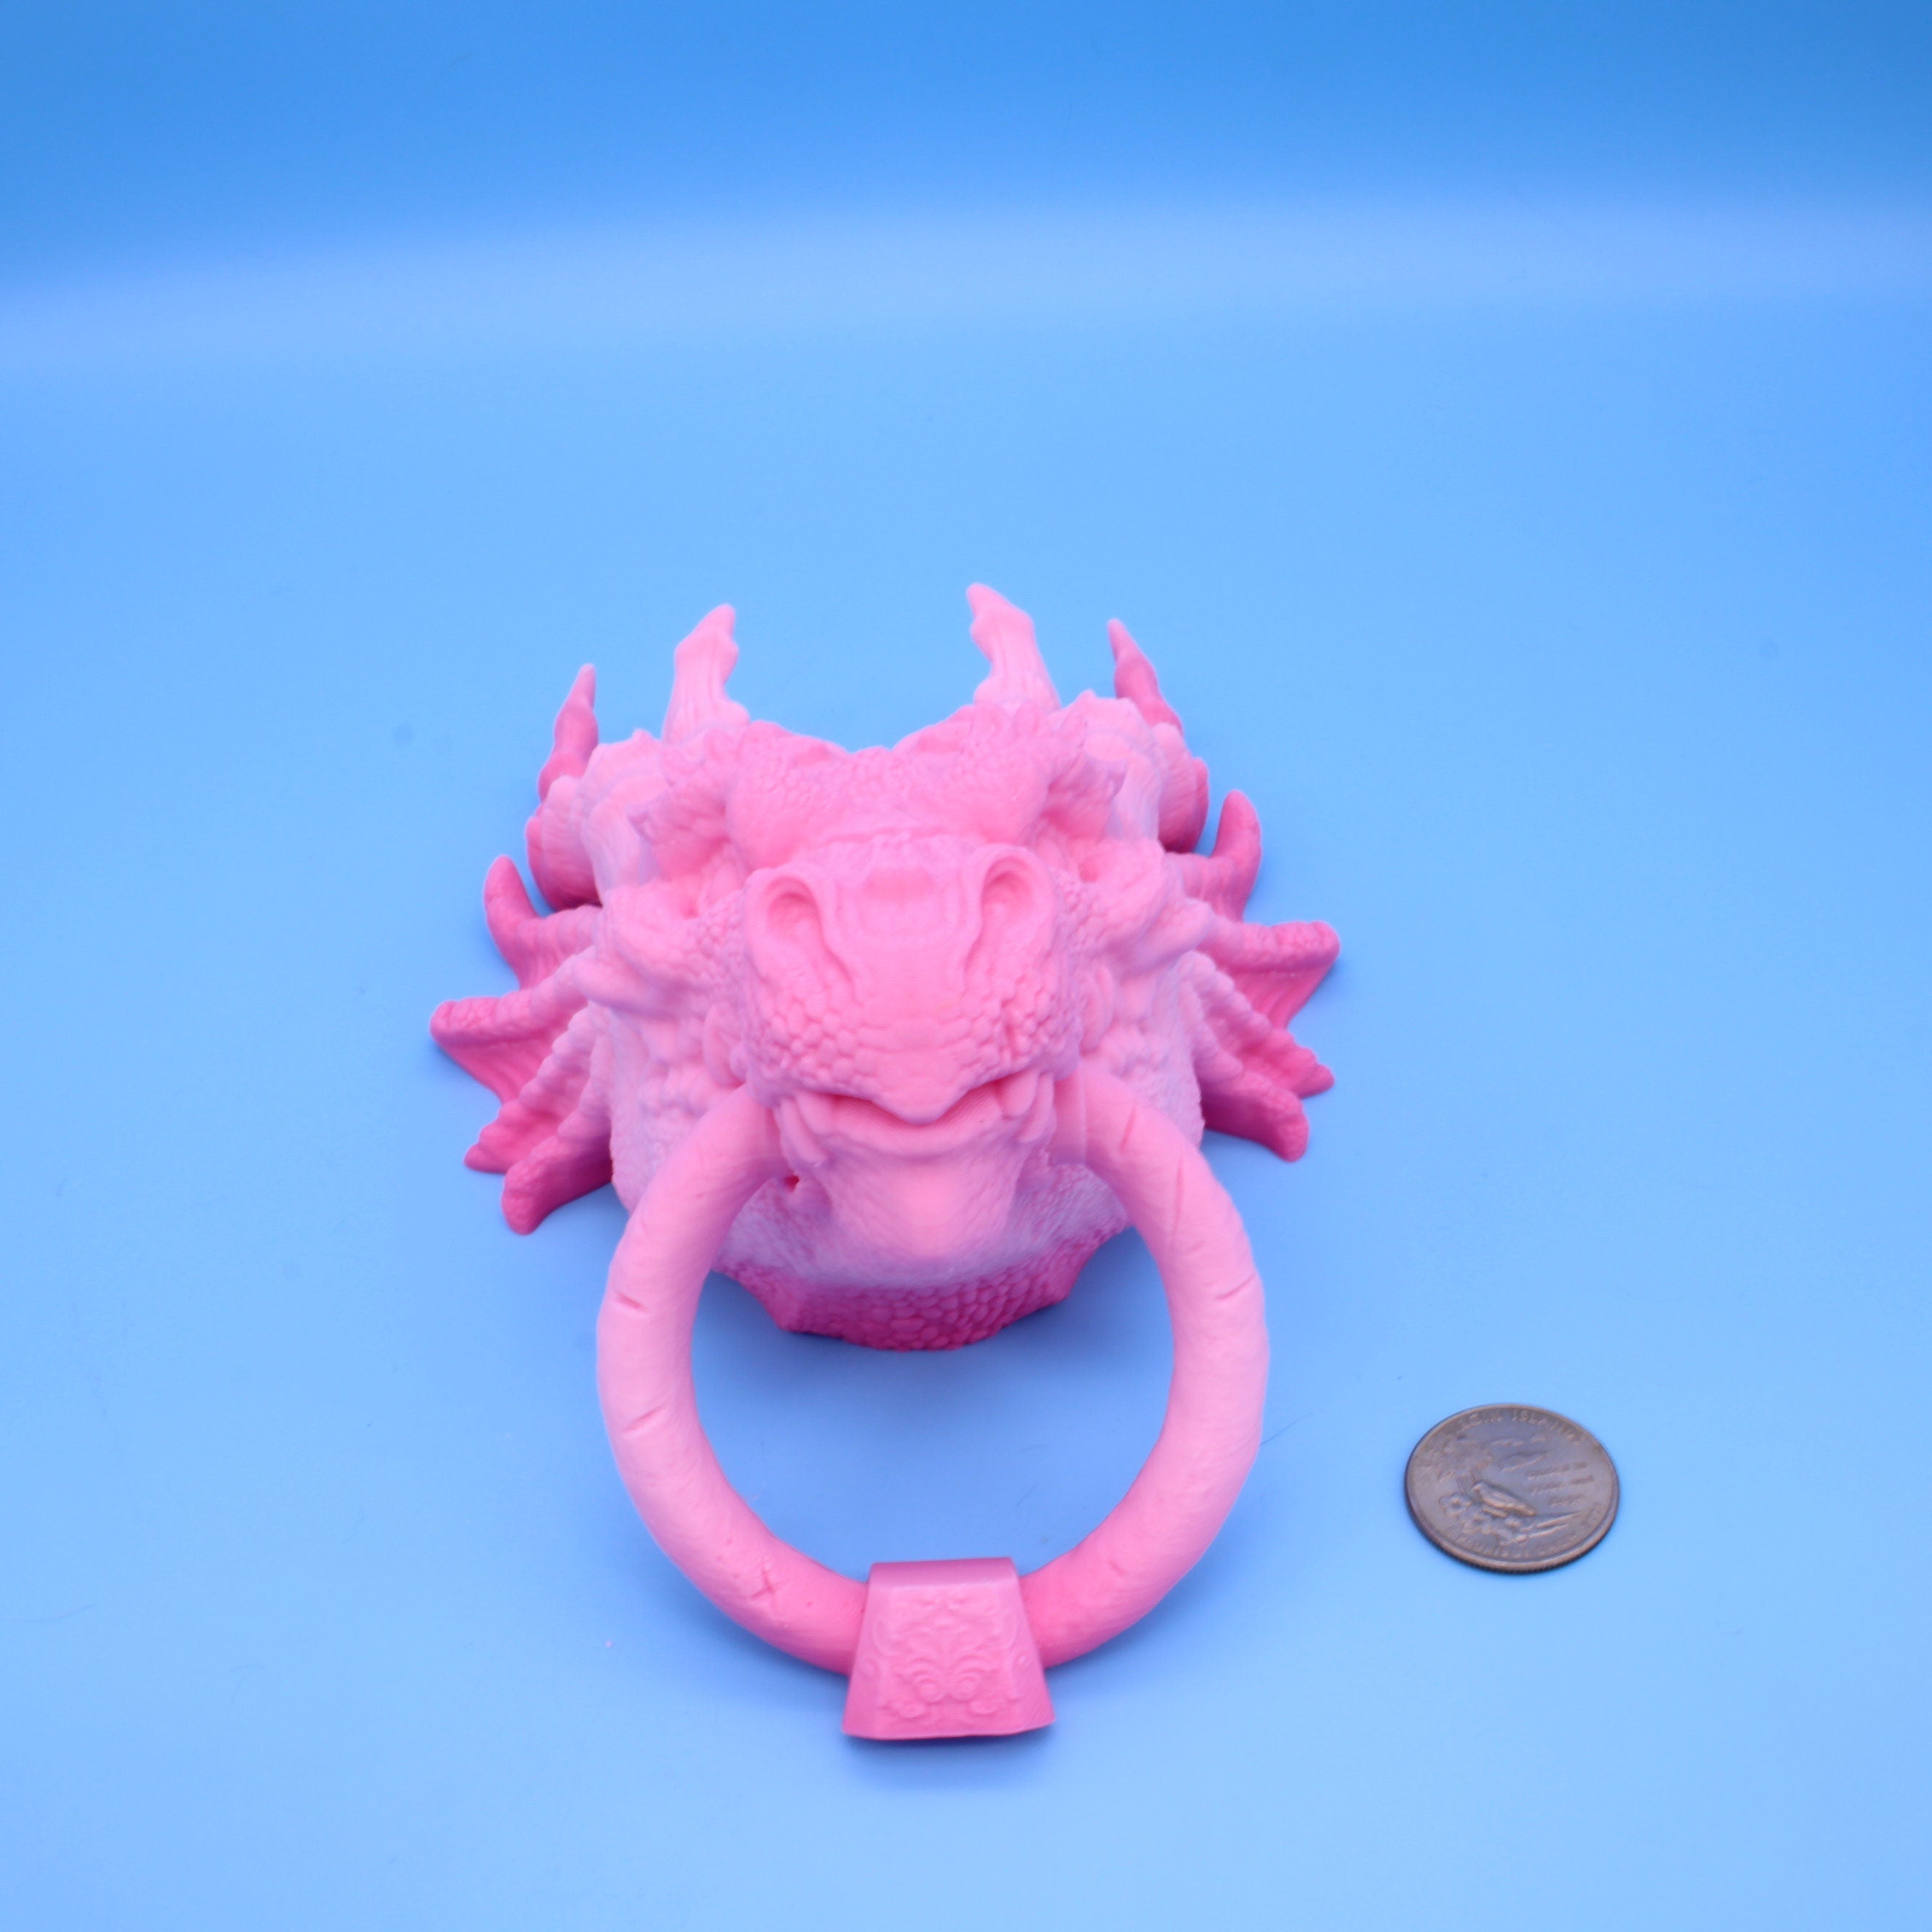 Dragon Head- Door Knocker | 3D Printed | Unique Dragon knocker with moving knocker